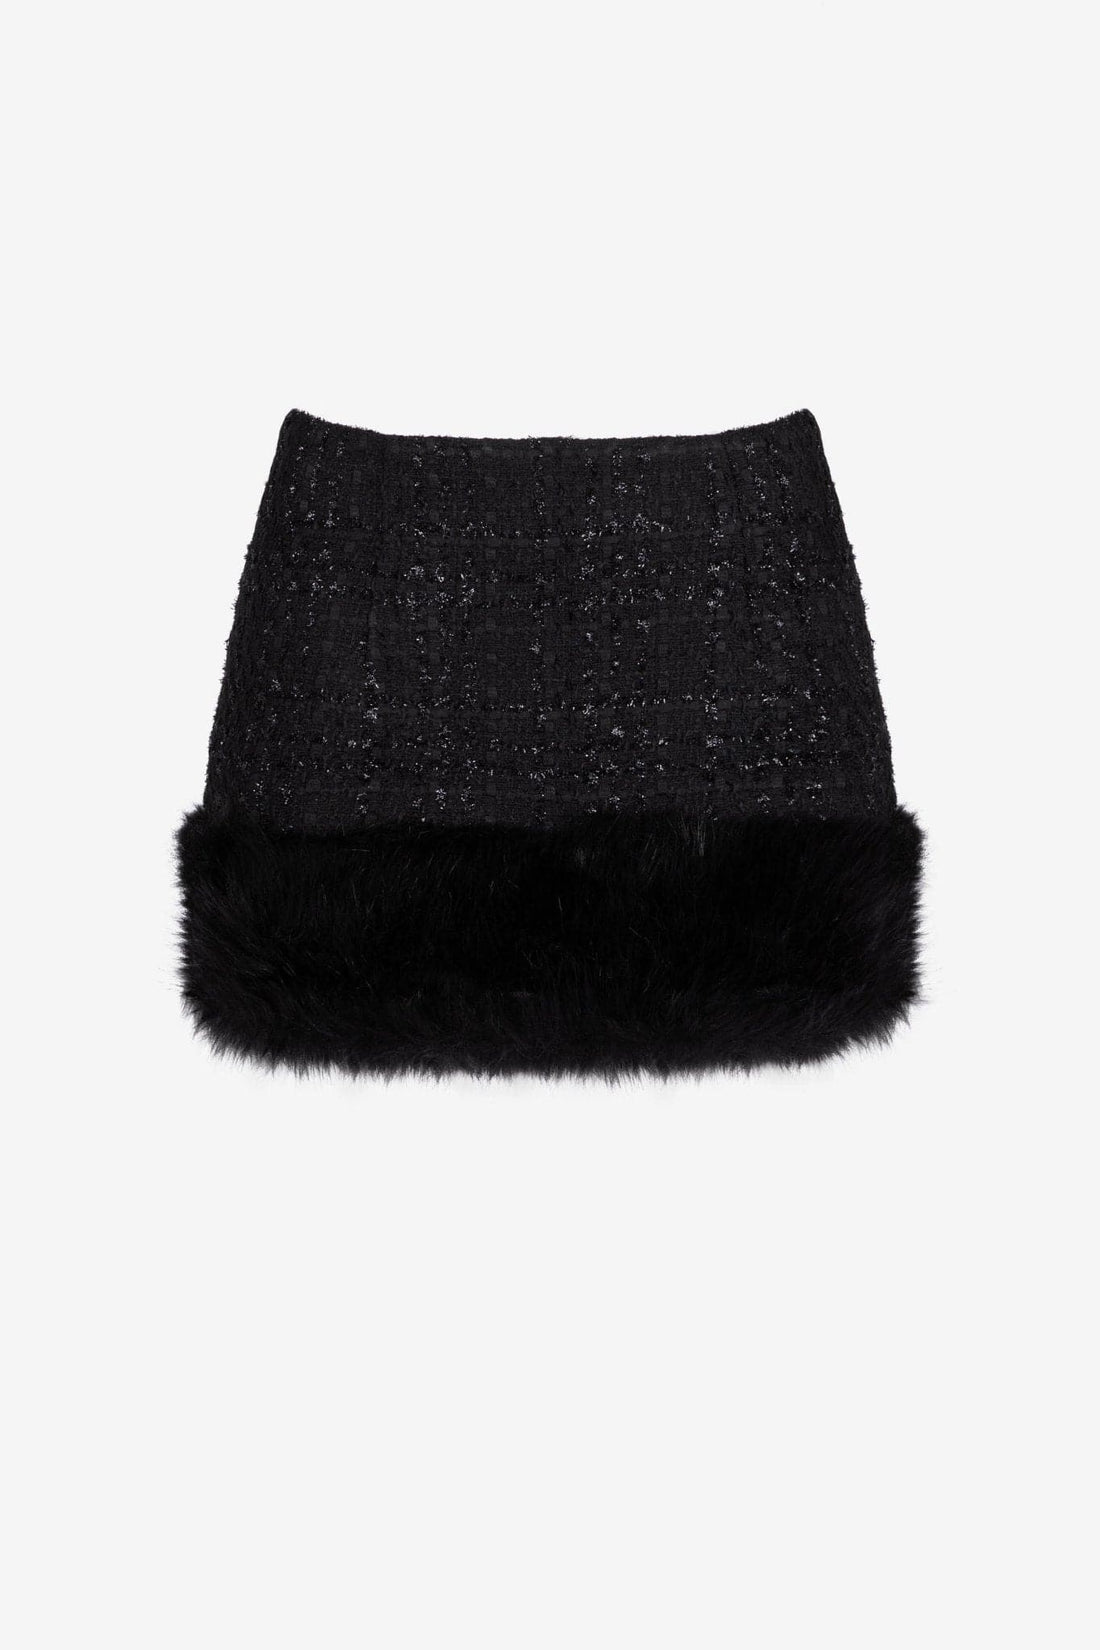 Black Low Rise Tweed Mini Skirt with Fur Trim - Heiress Beverly Hills XXL